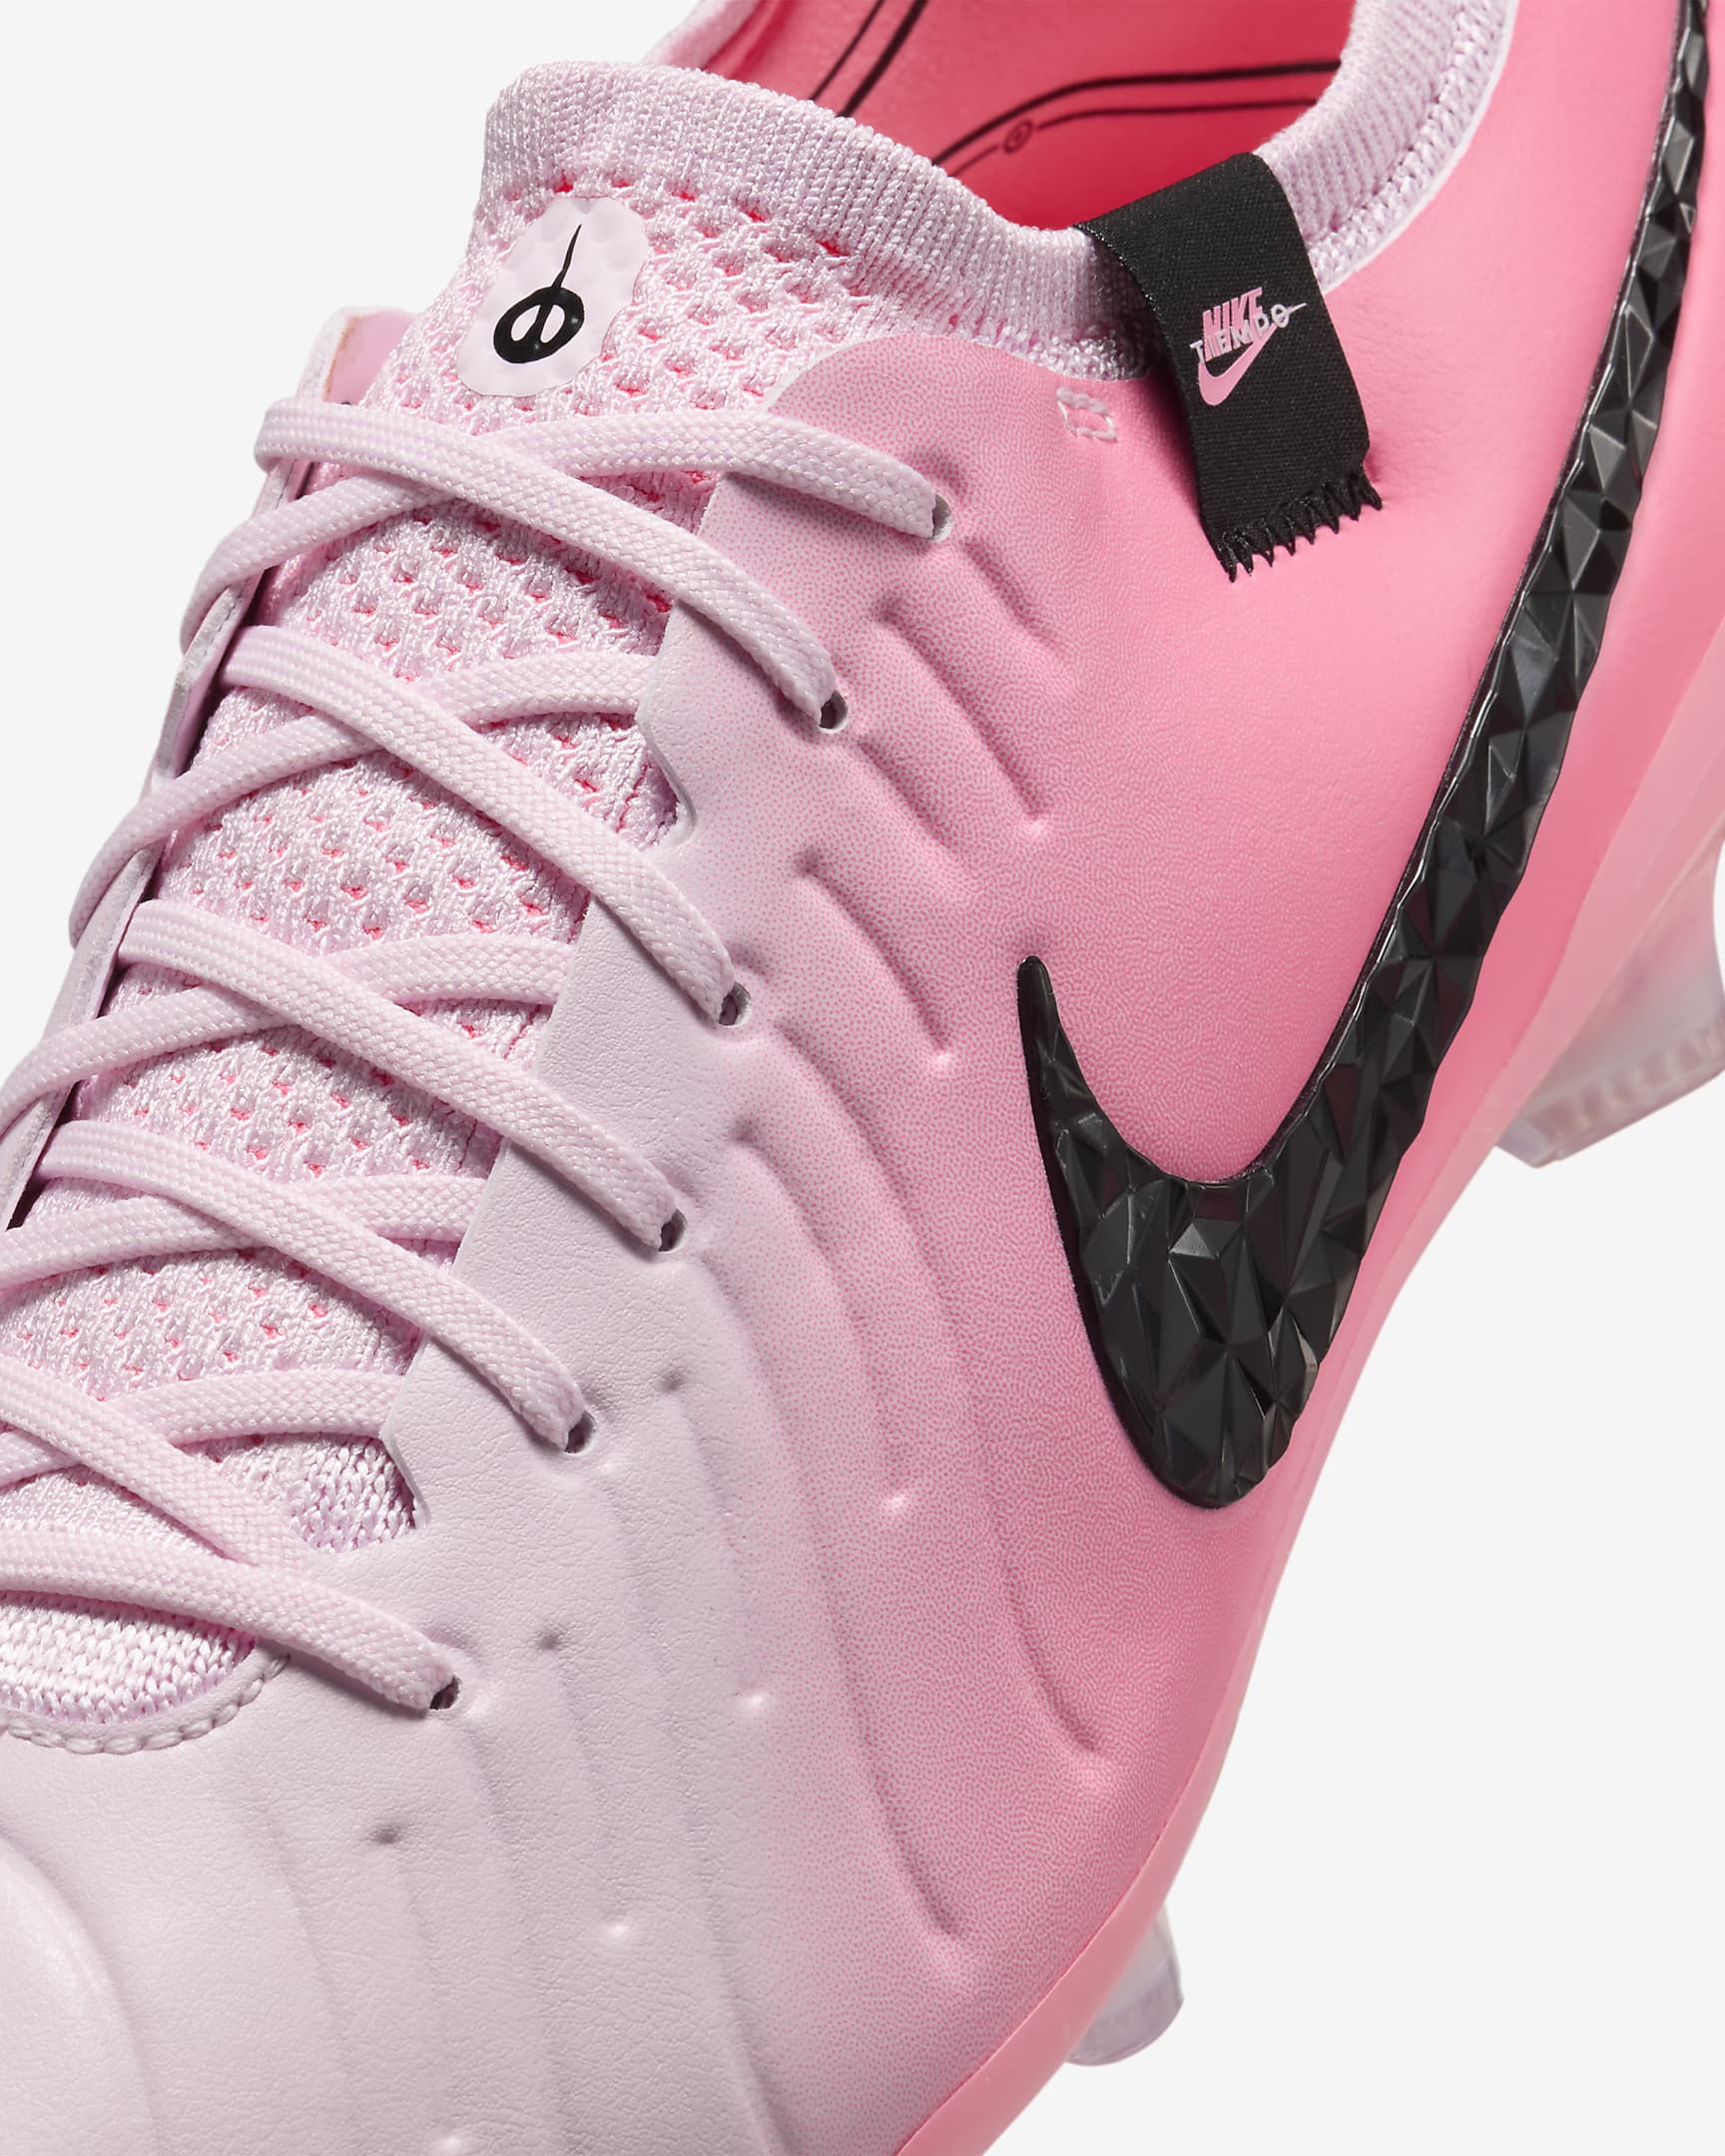 Nike Tiempo Legend 10 Elite FG Low-Top Football Boot - Pink Foam/Black